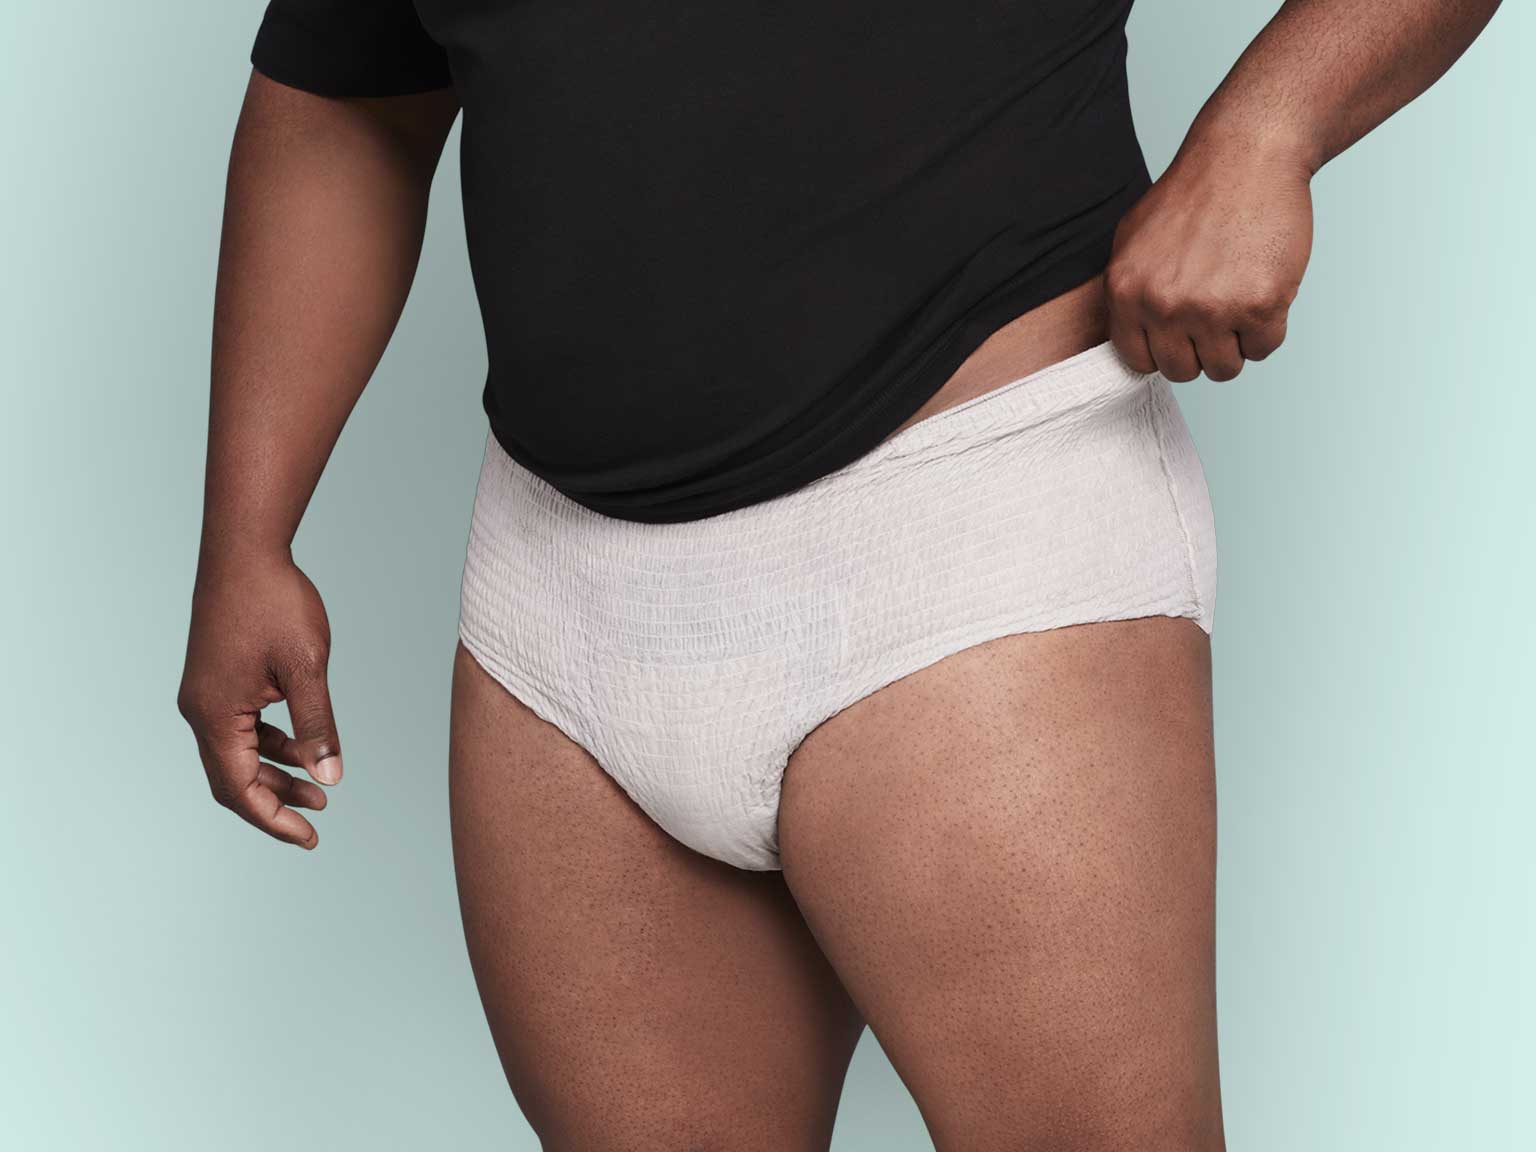 NC man's BRIEF promising men a better underwear experience